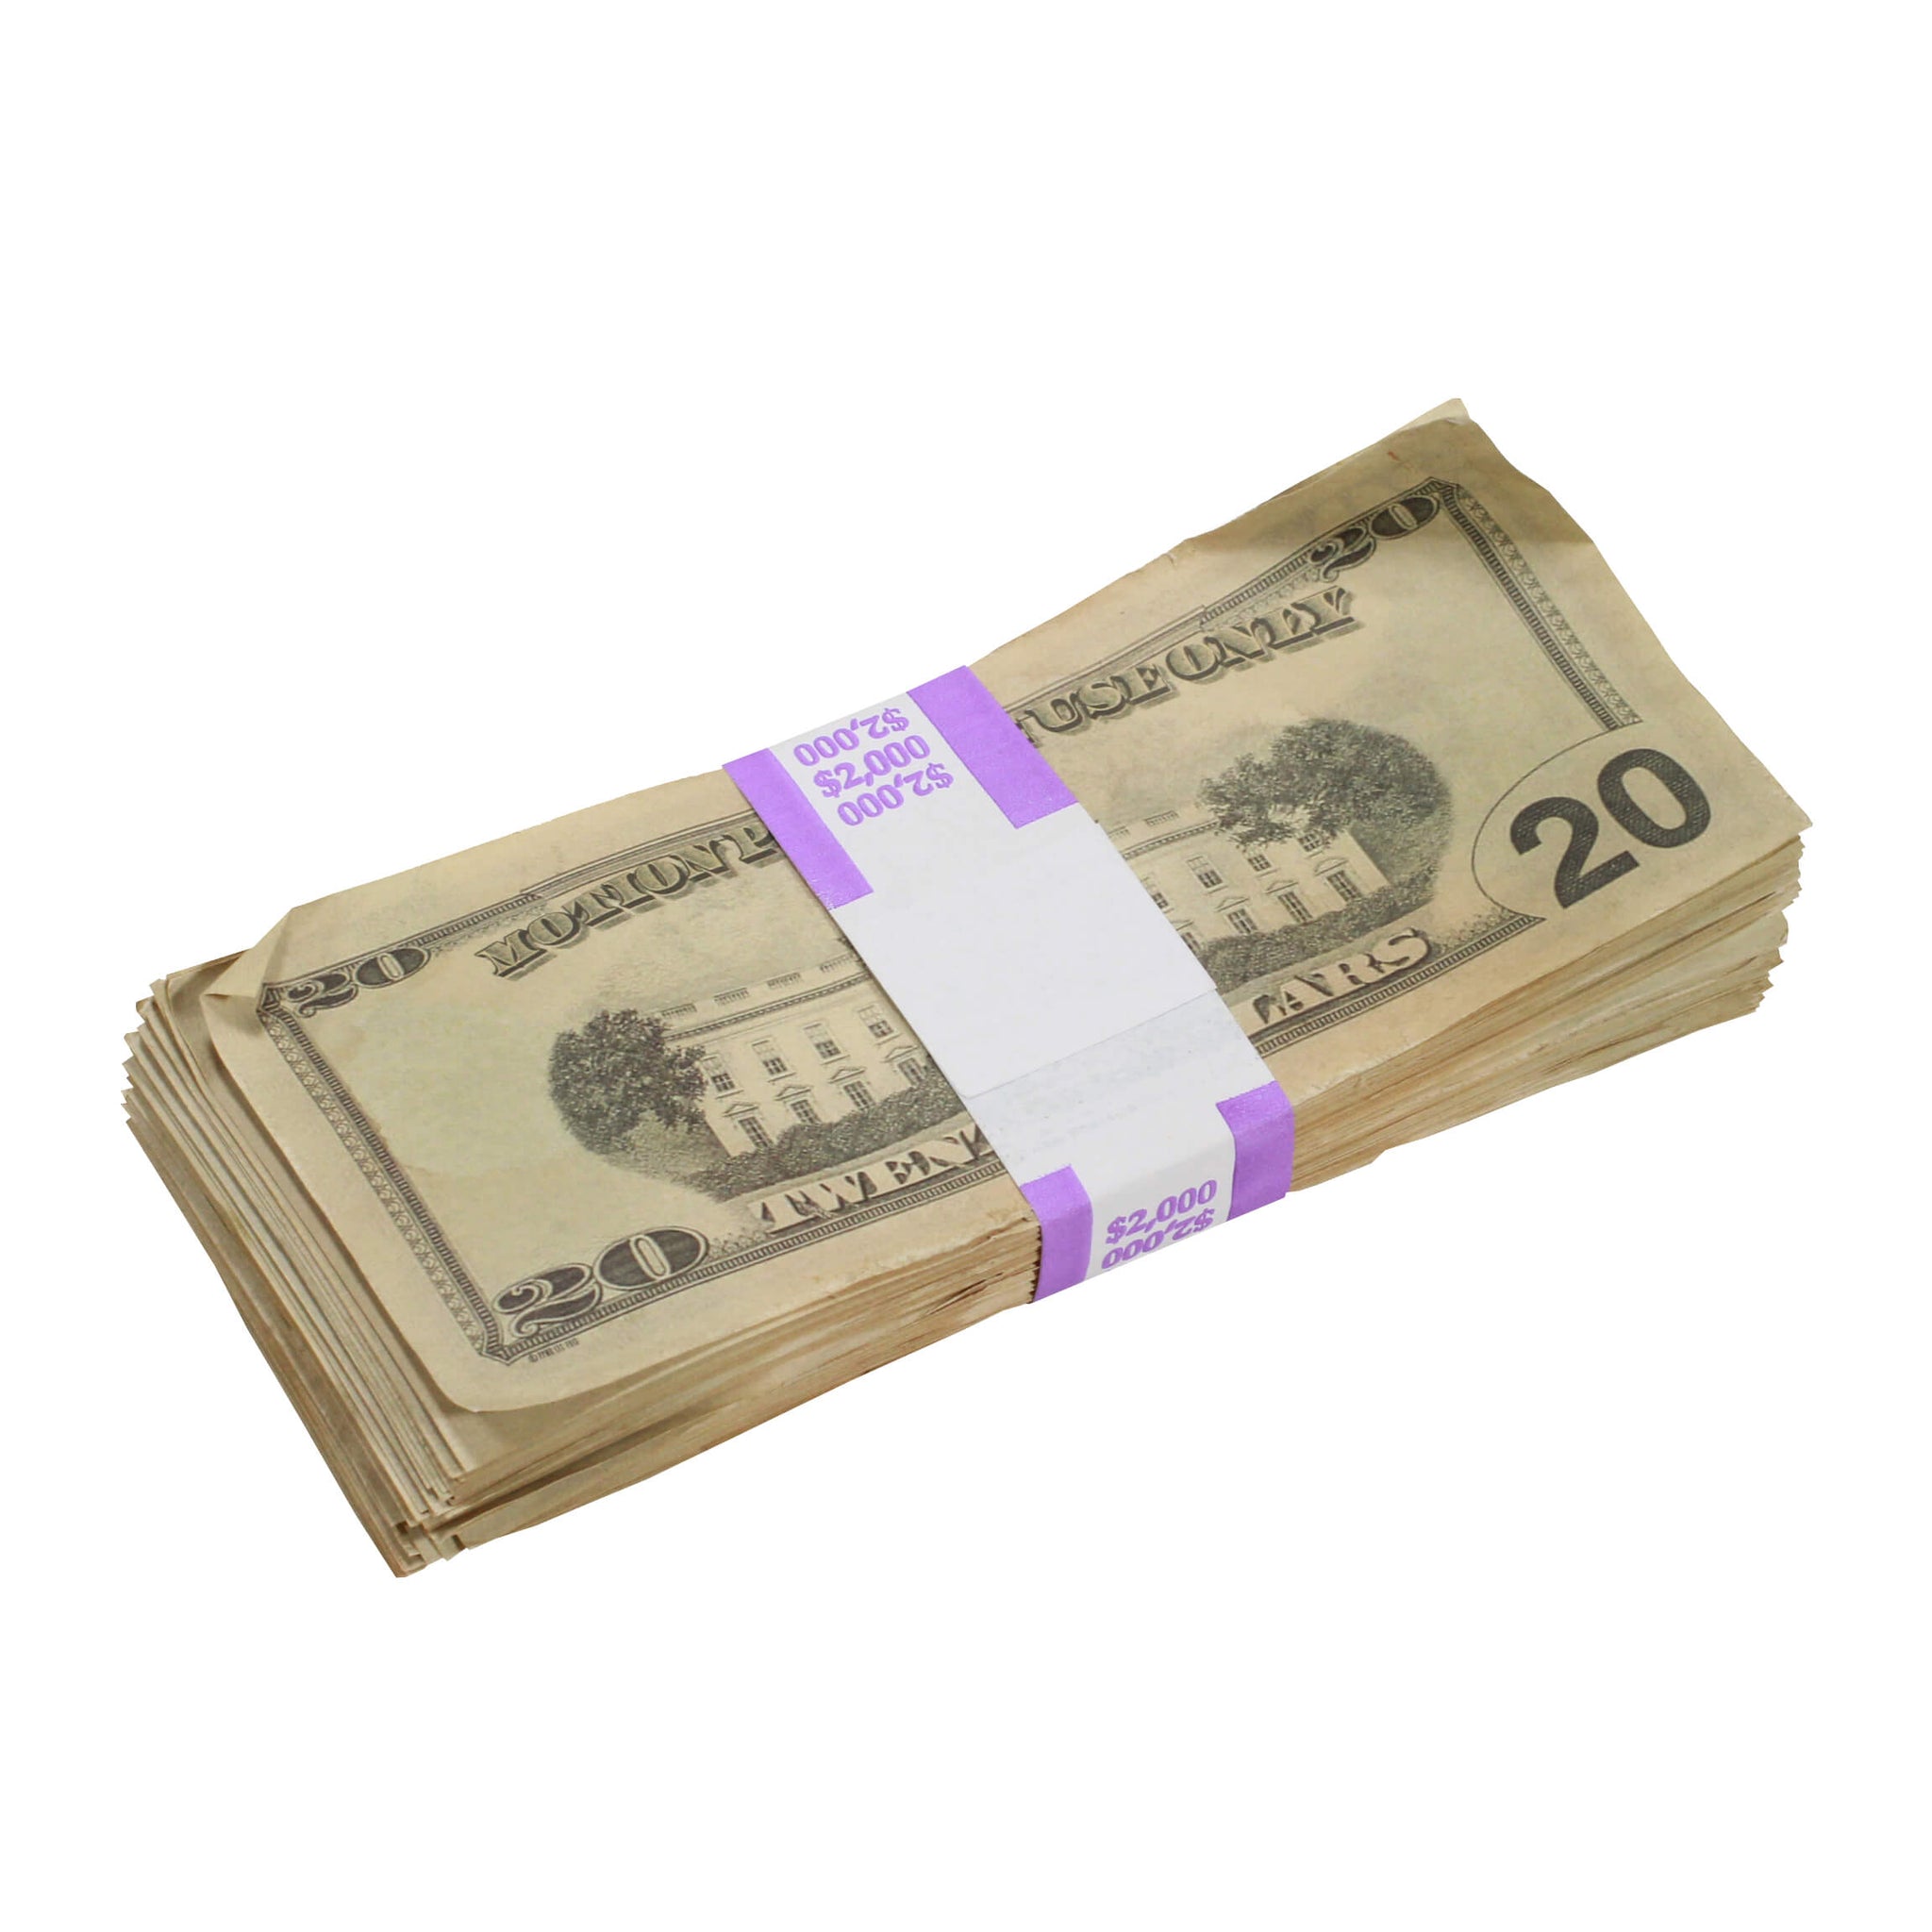 2000 Series $20s Blank Filler $2,000 Prop Money Stack